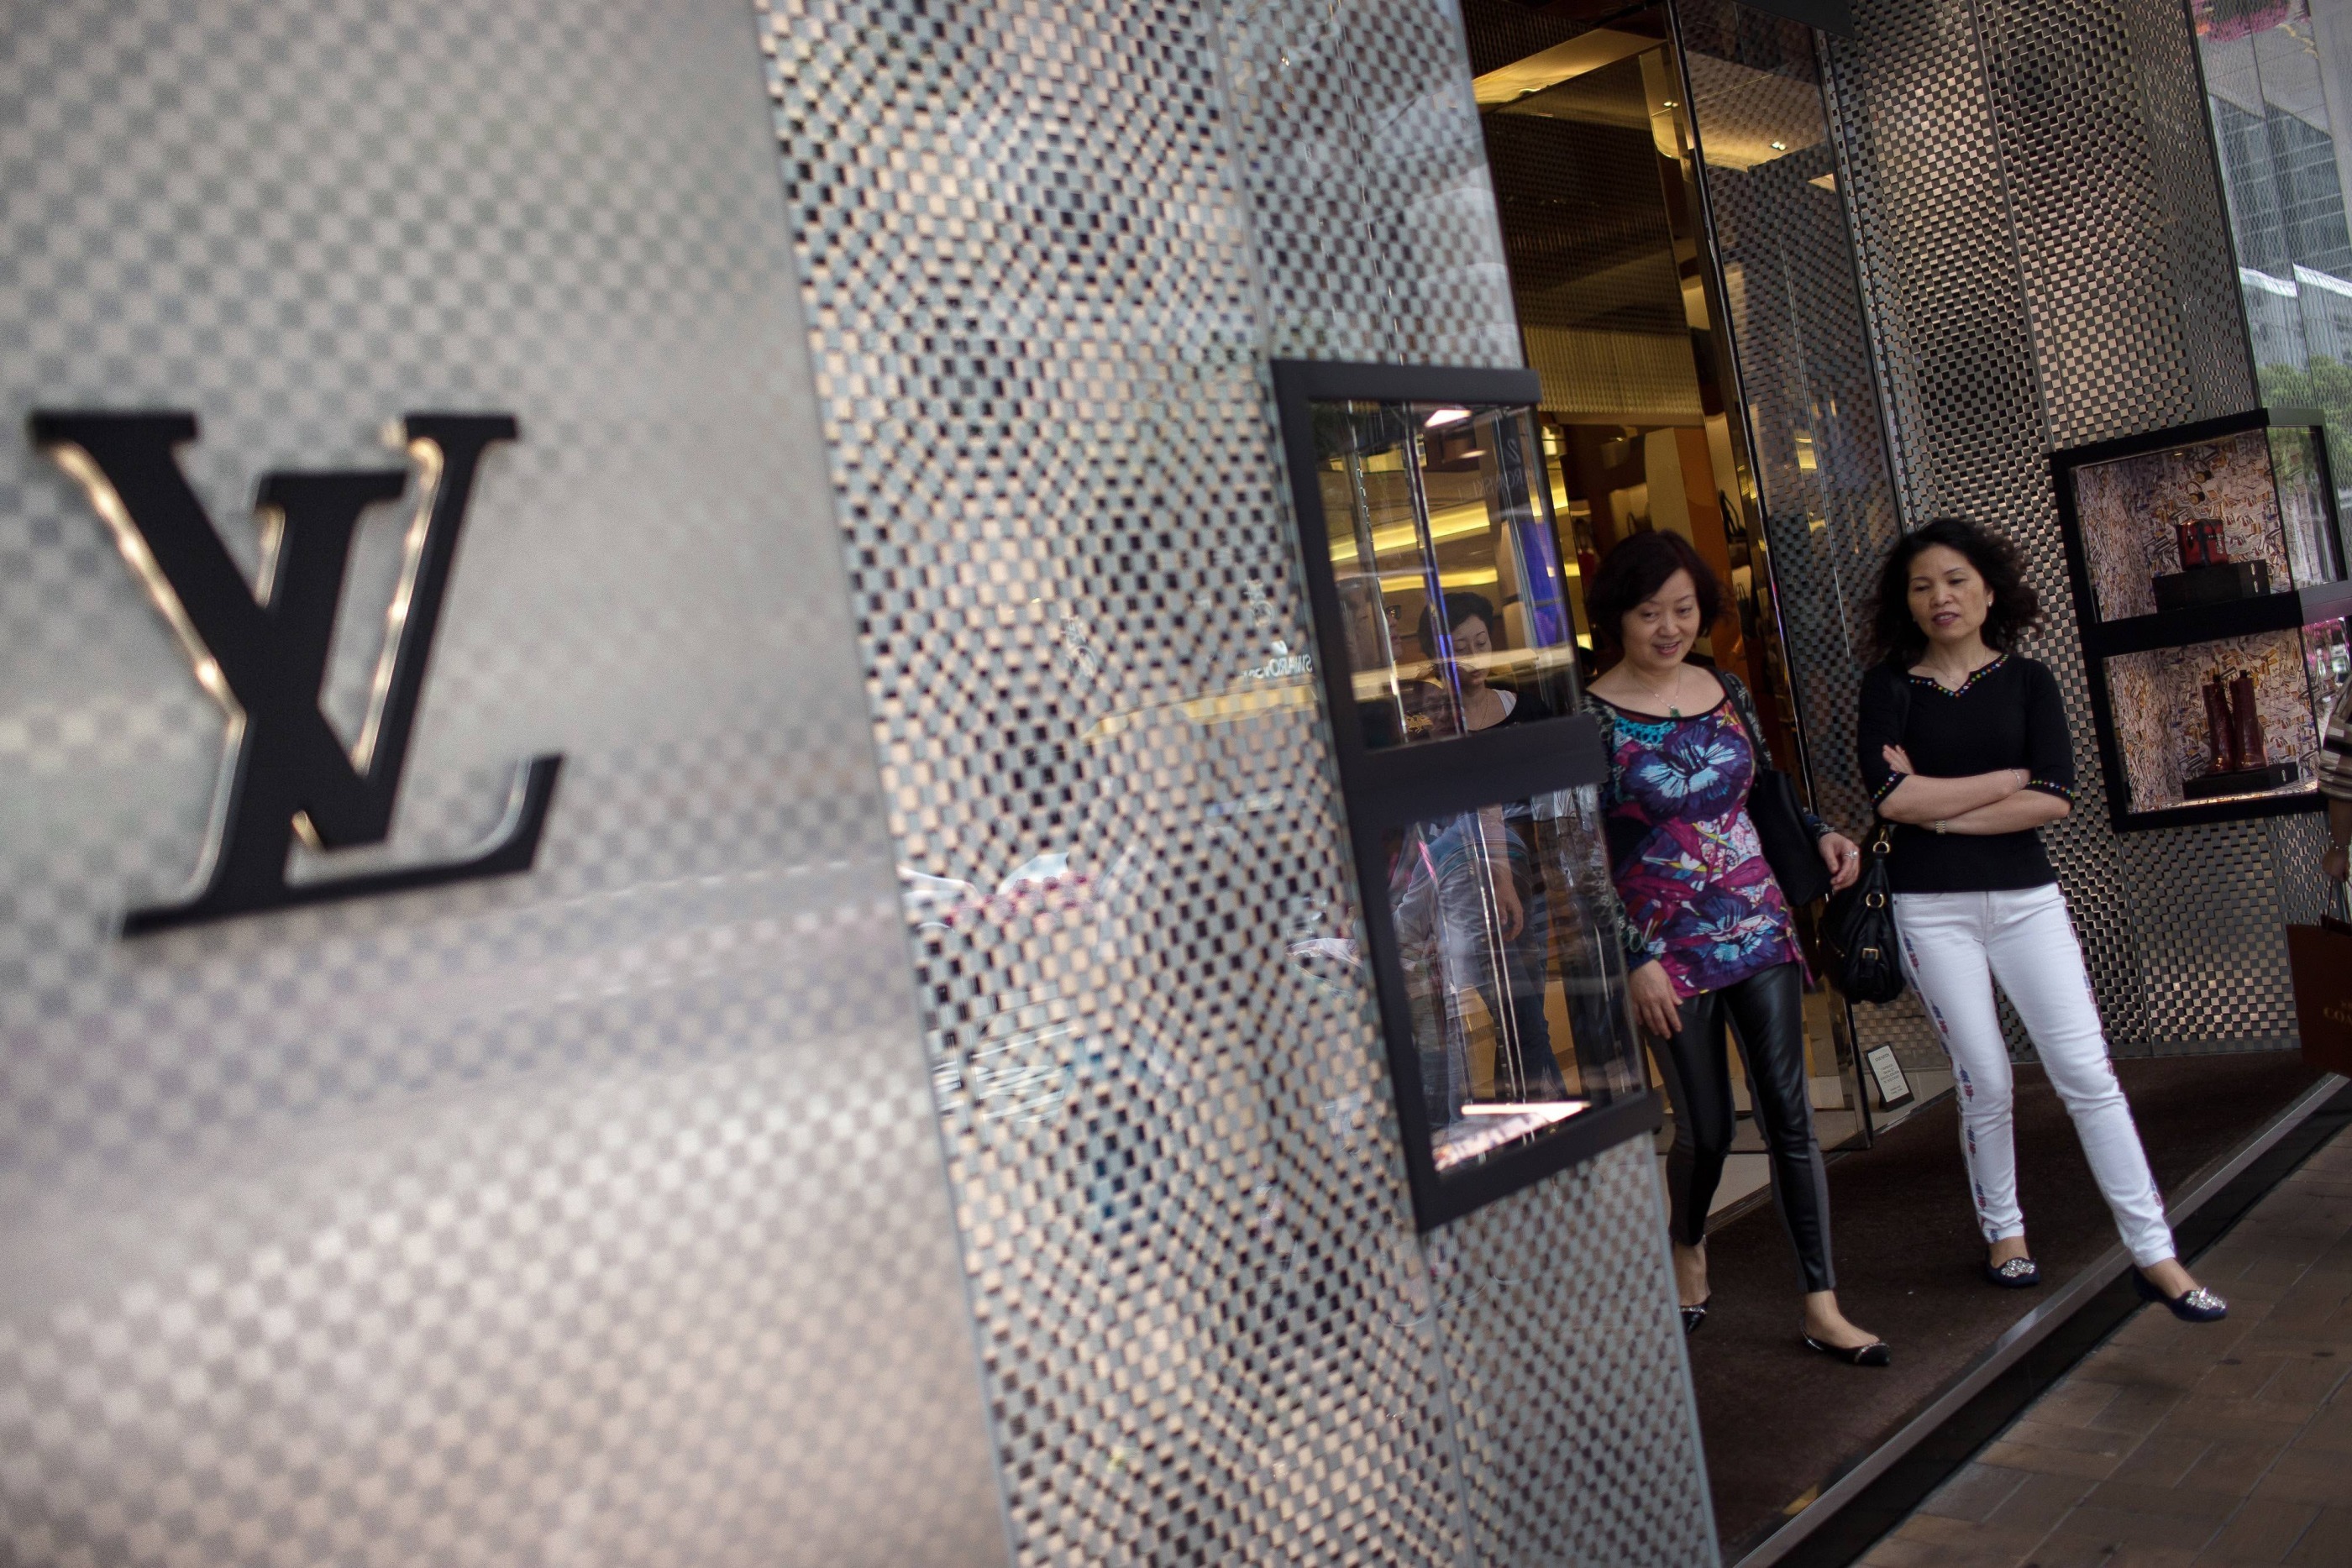 Louis Vuitton's New Speaker Is Disrupting Luxury